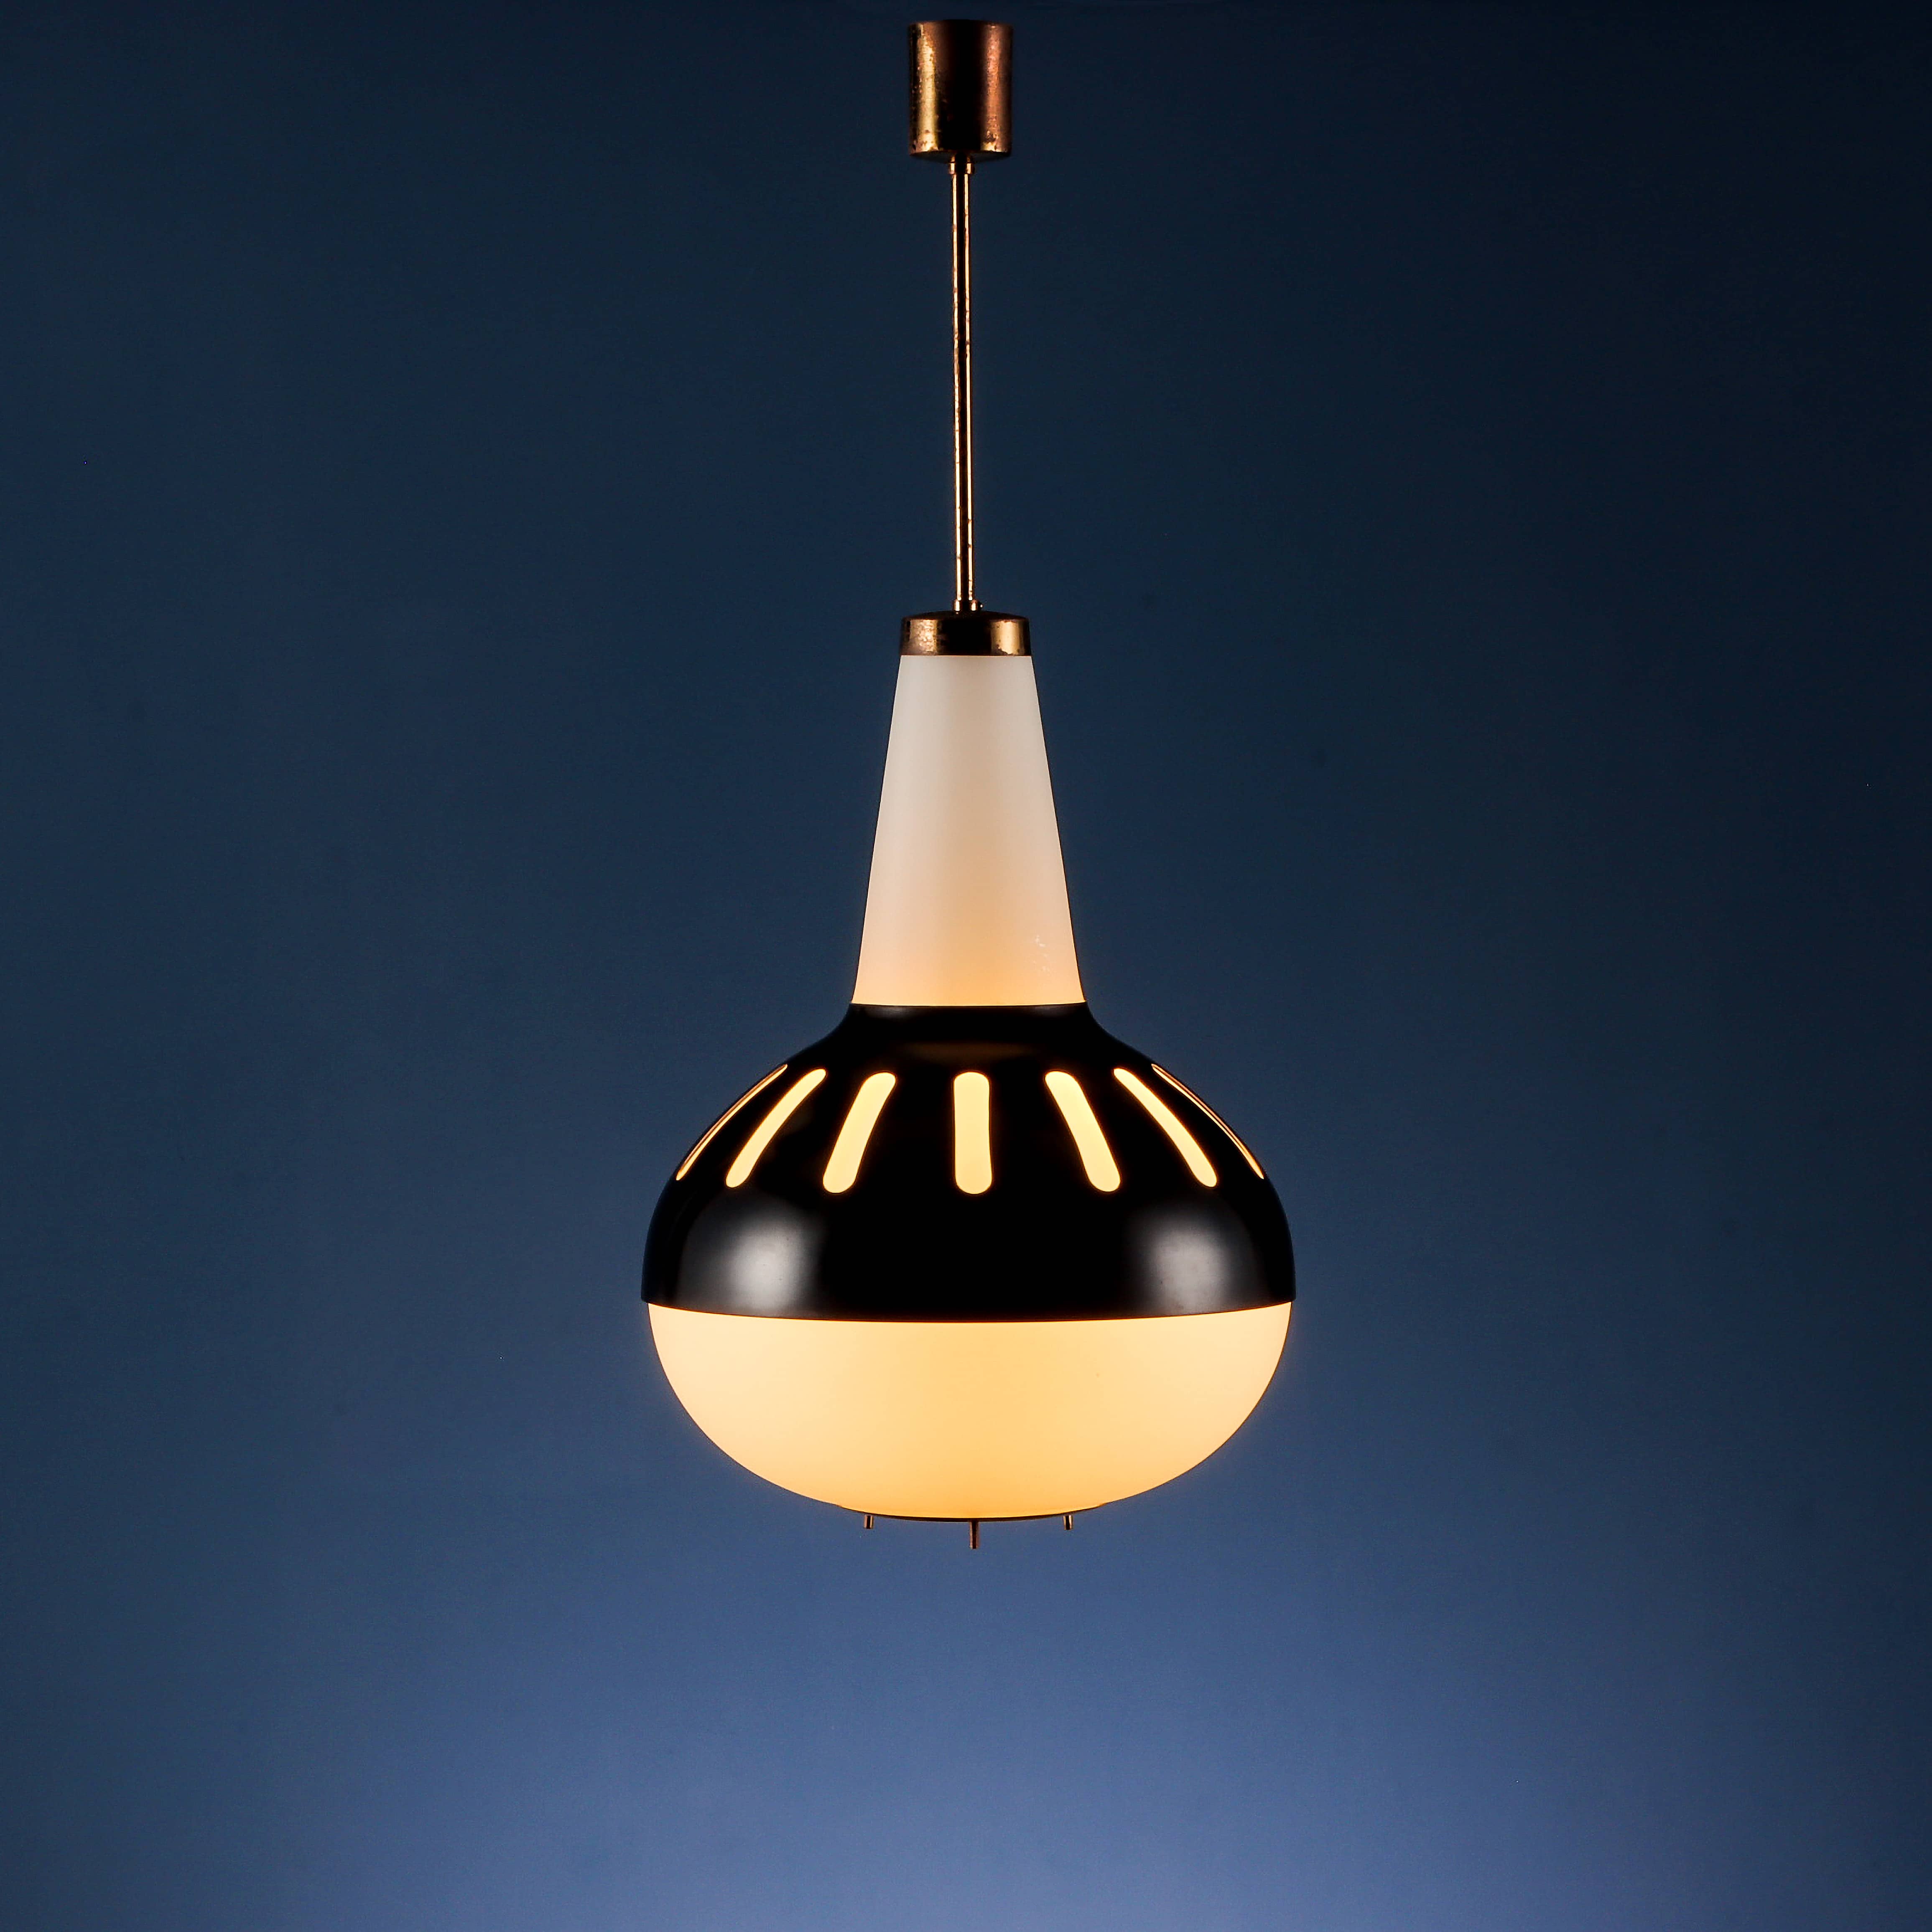 1960s lamp attributable to Max Ingrand